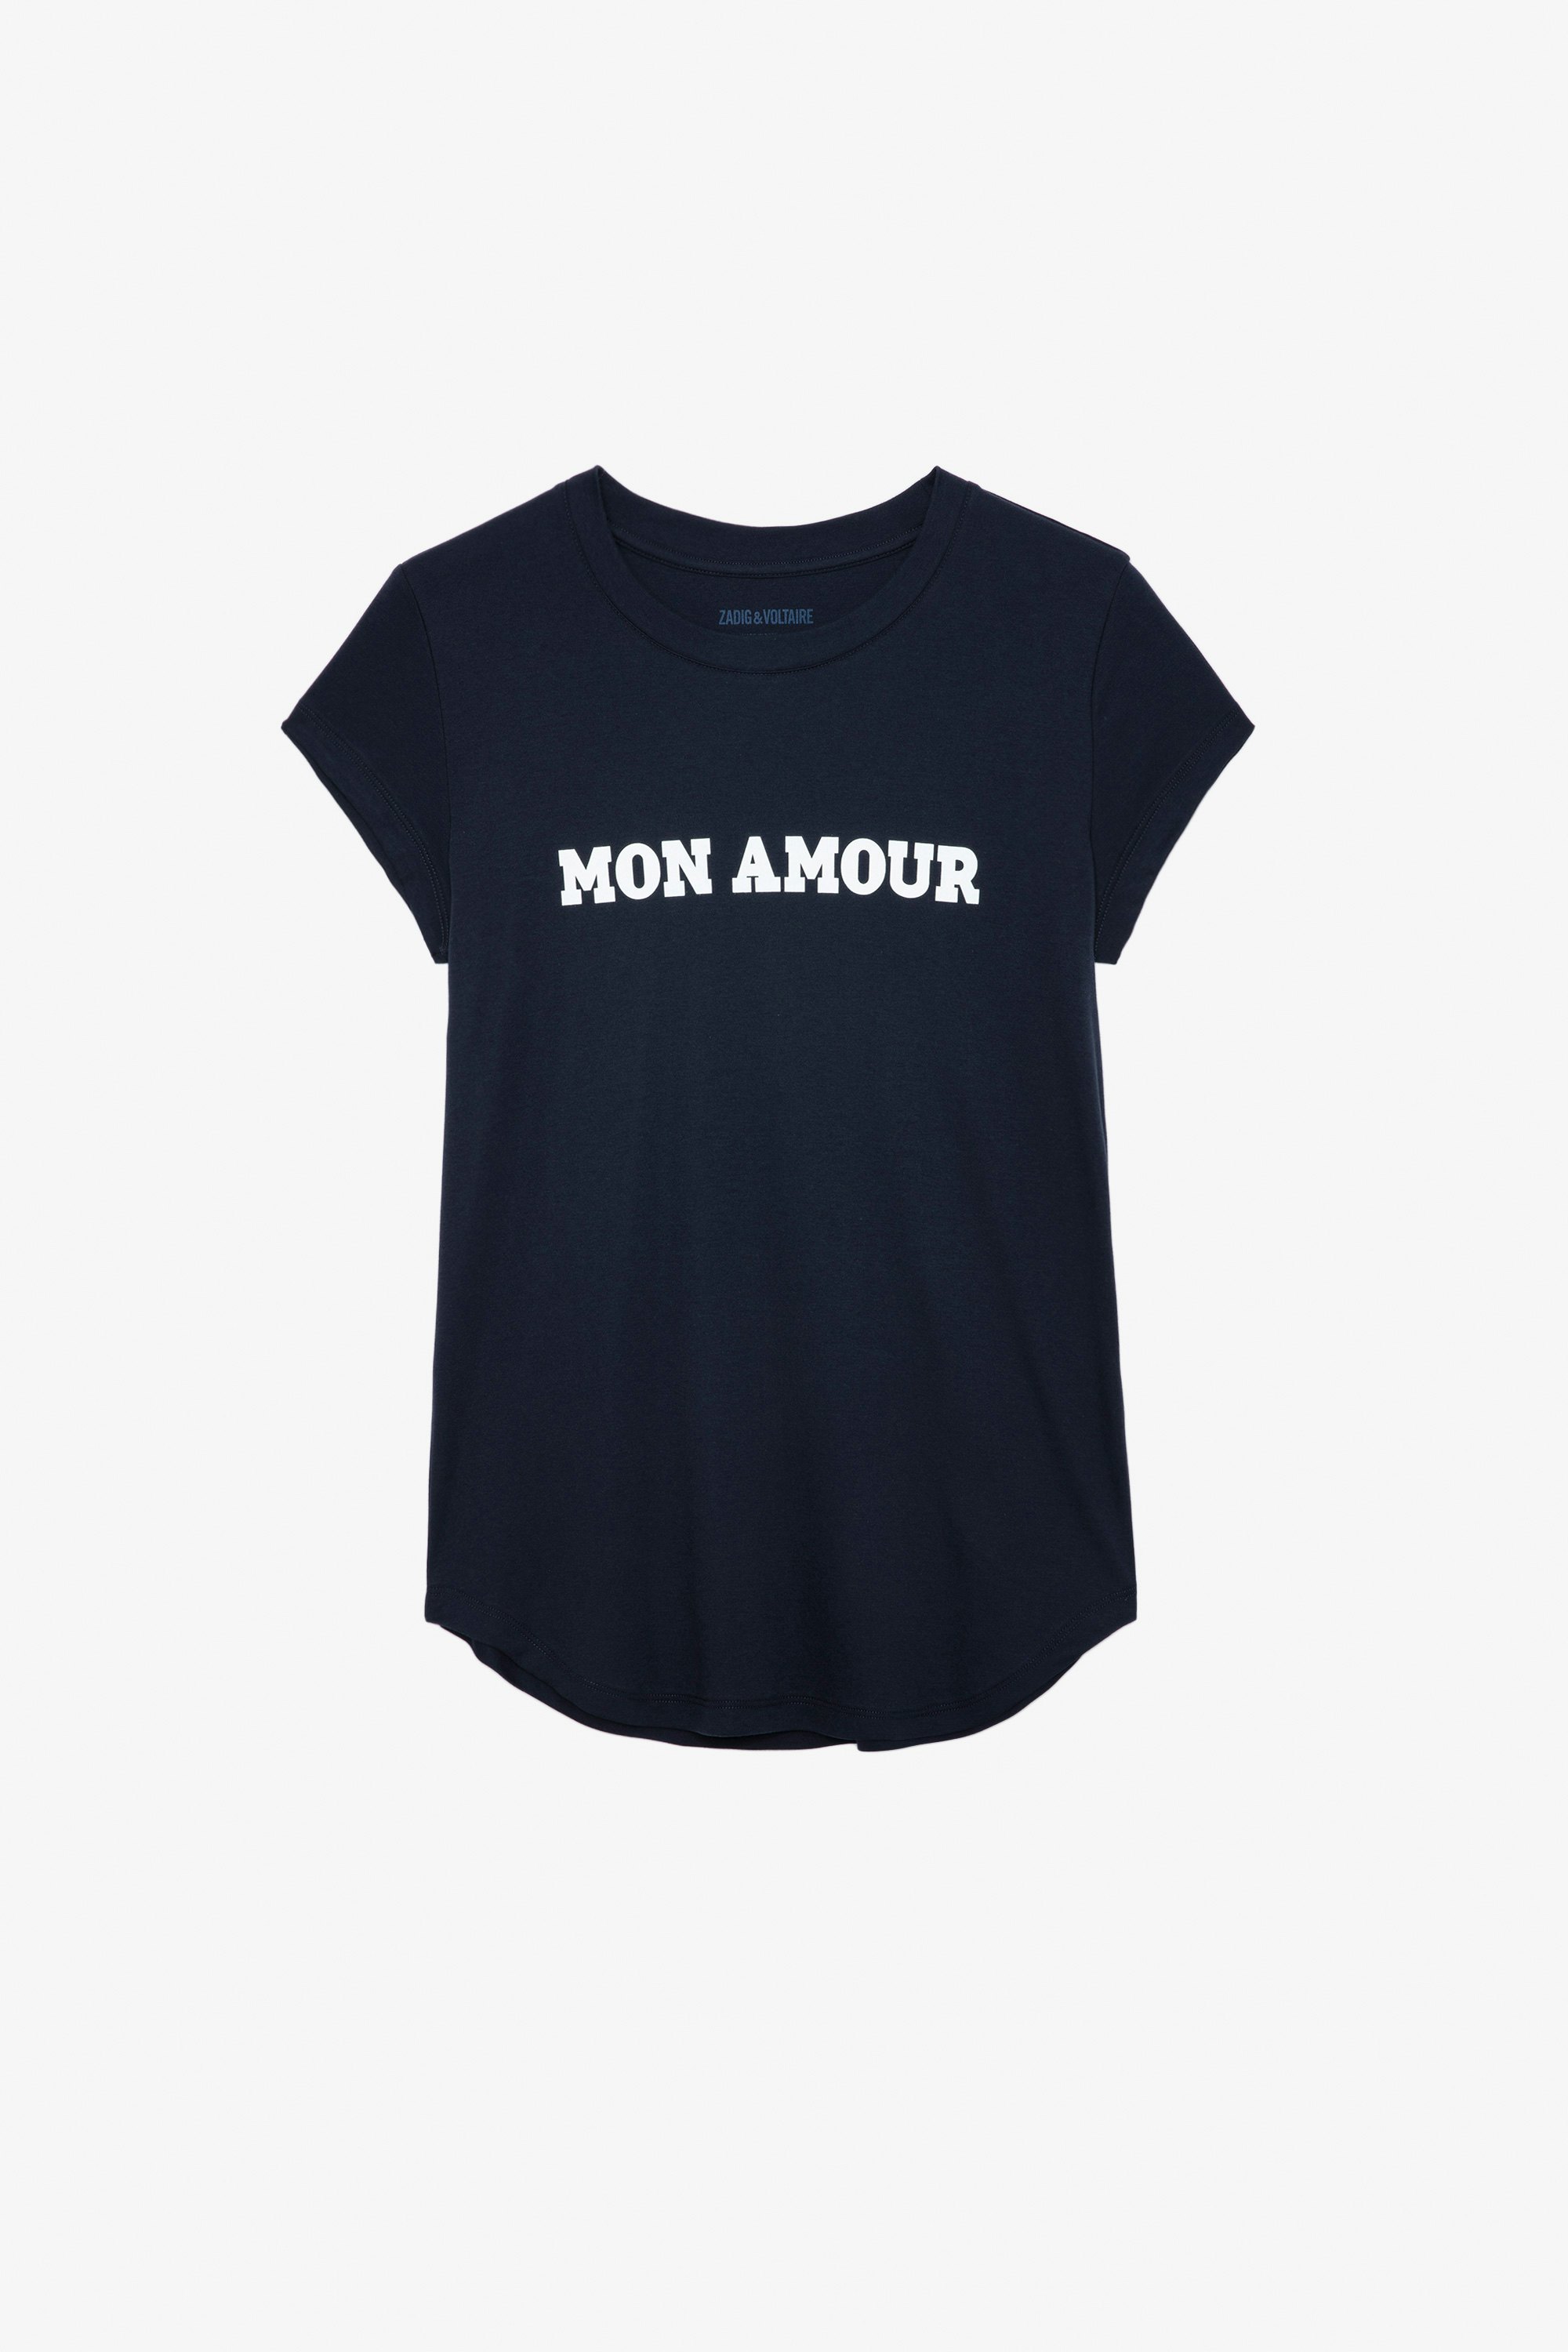 Woop Mon Amour T-shirt - Women’s navy blue cotton T-shirt with “Mon amour” slogan